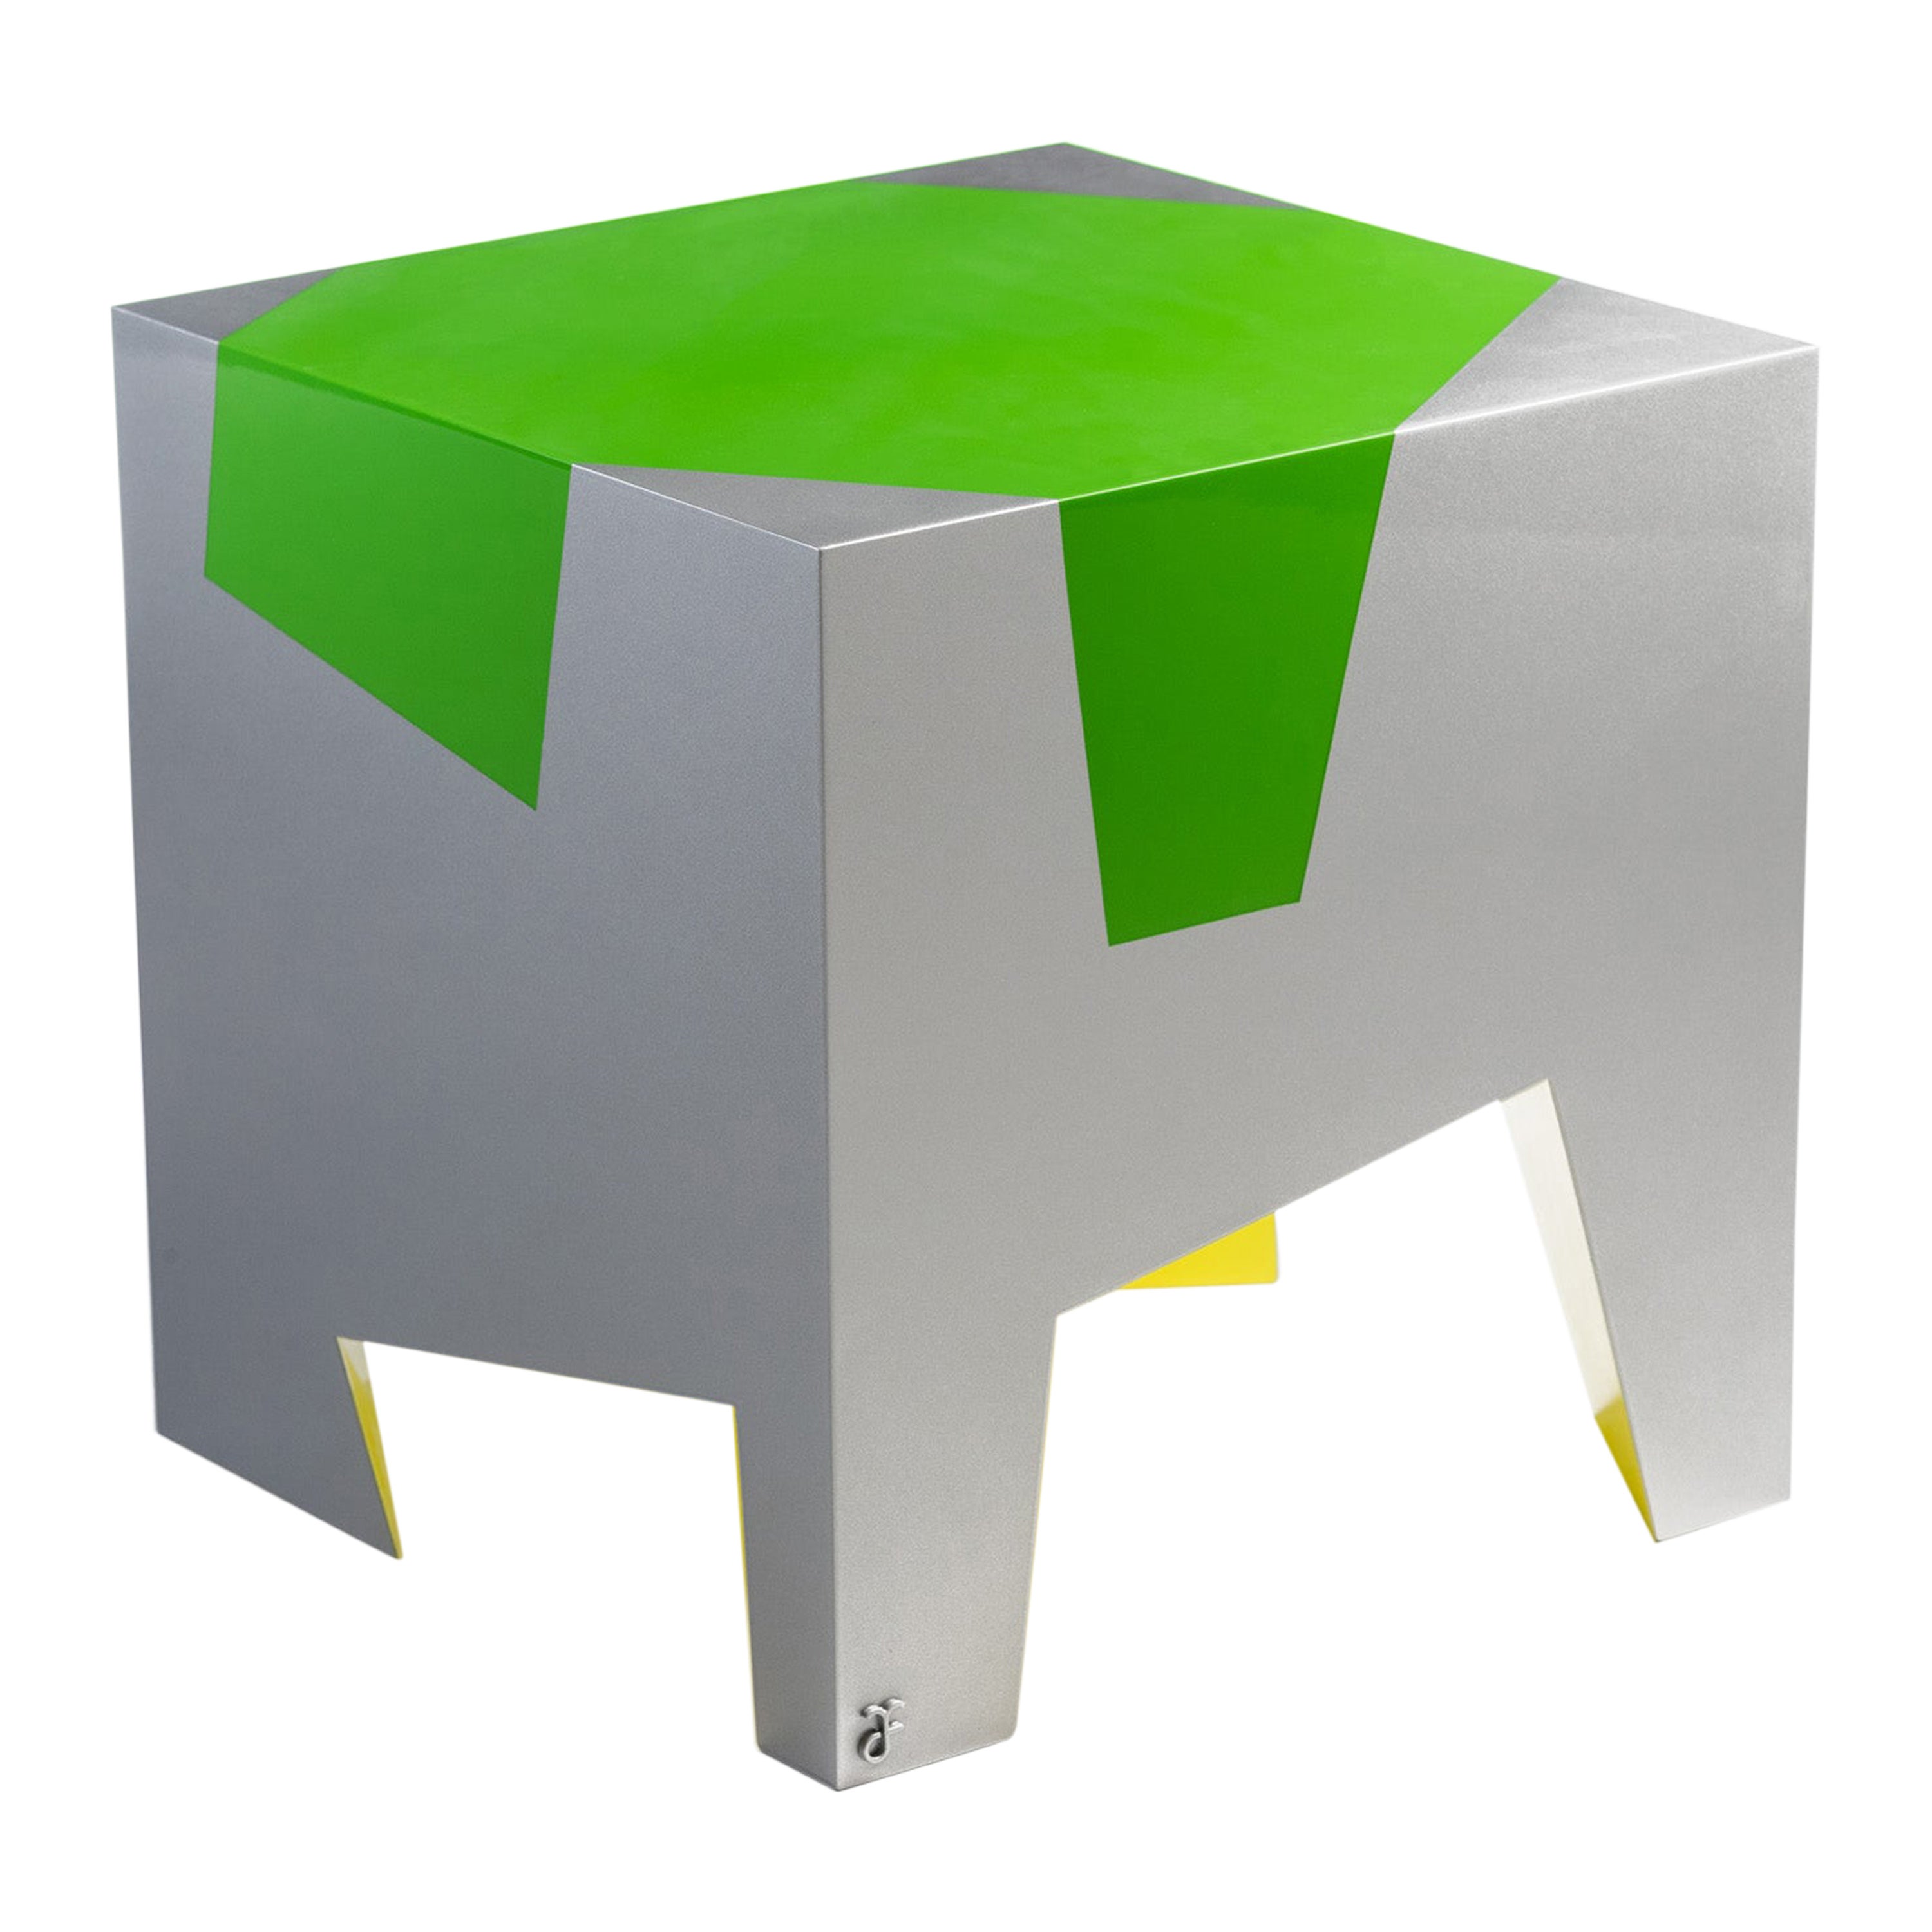 Sissi - Sissi - Siège empilable contemporain vert et jaune en aluminium par Altreforme